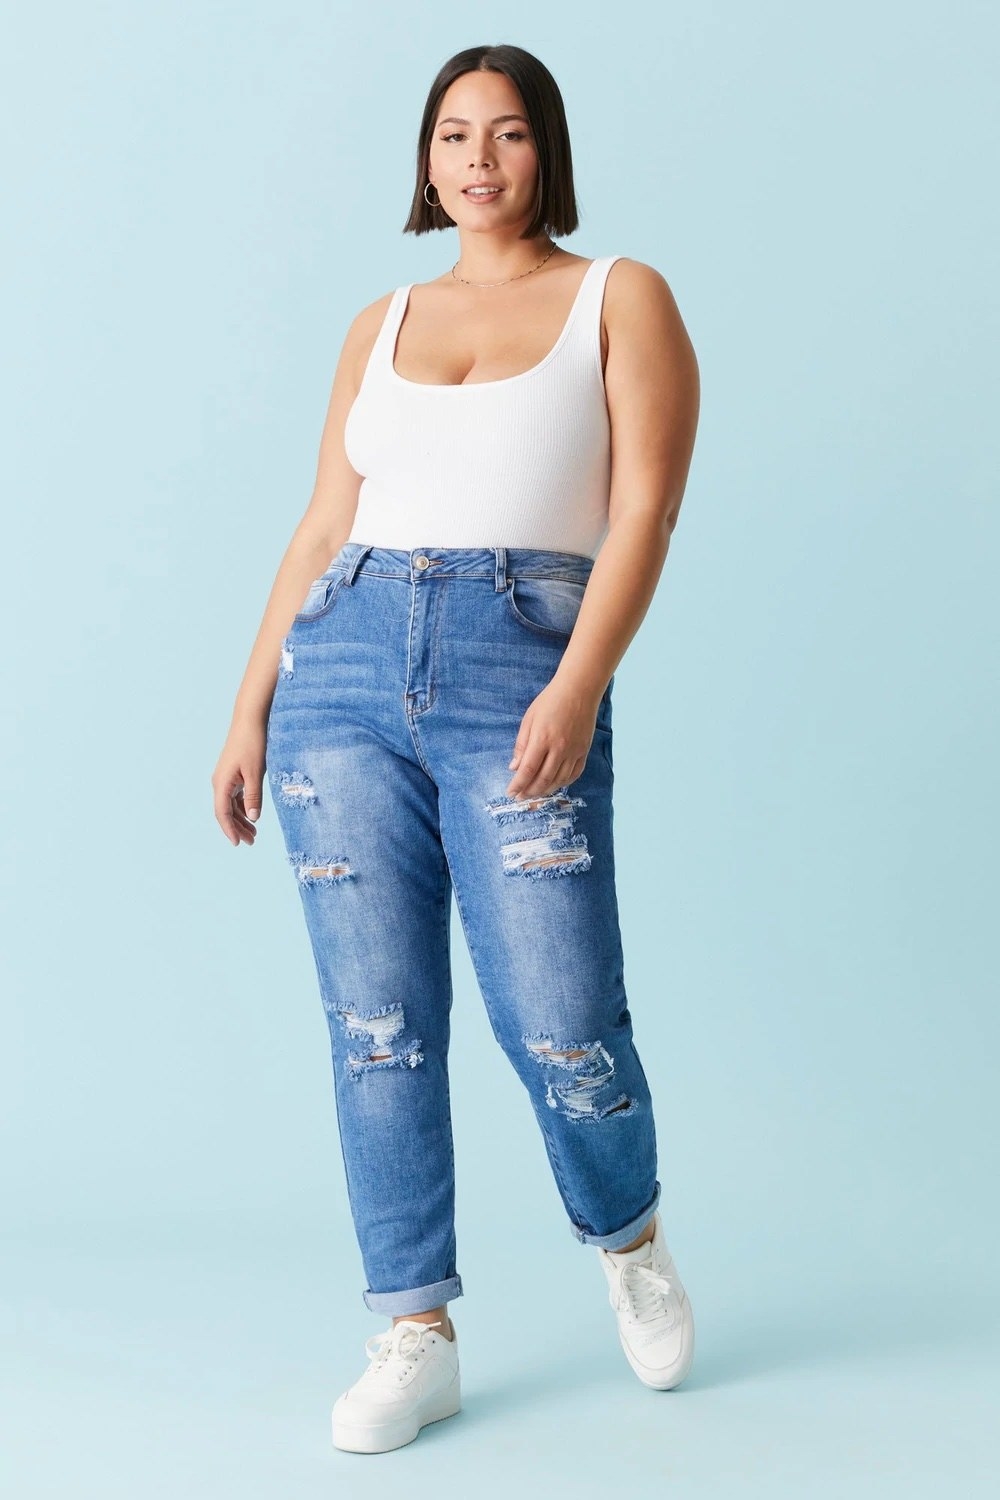 model wearing distressed jeans